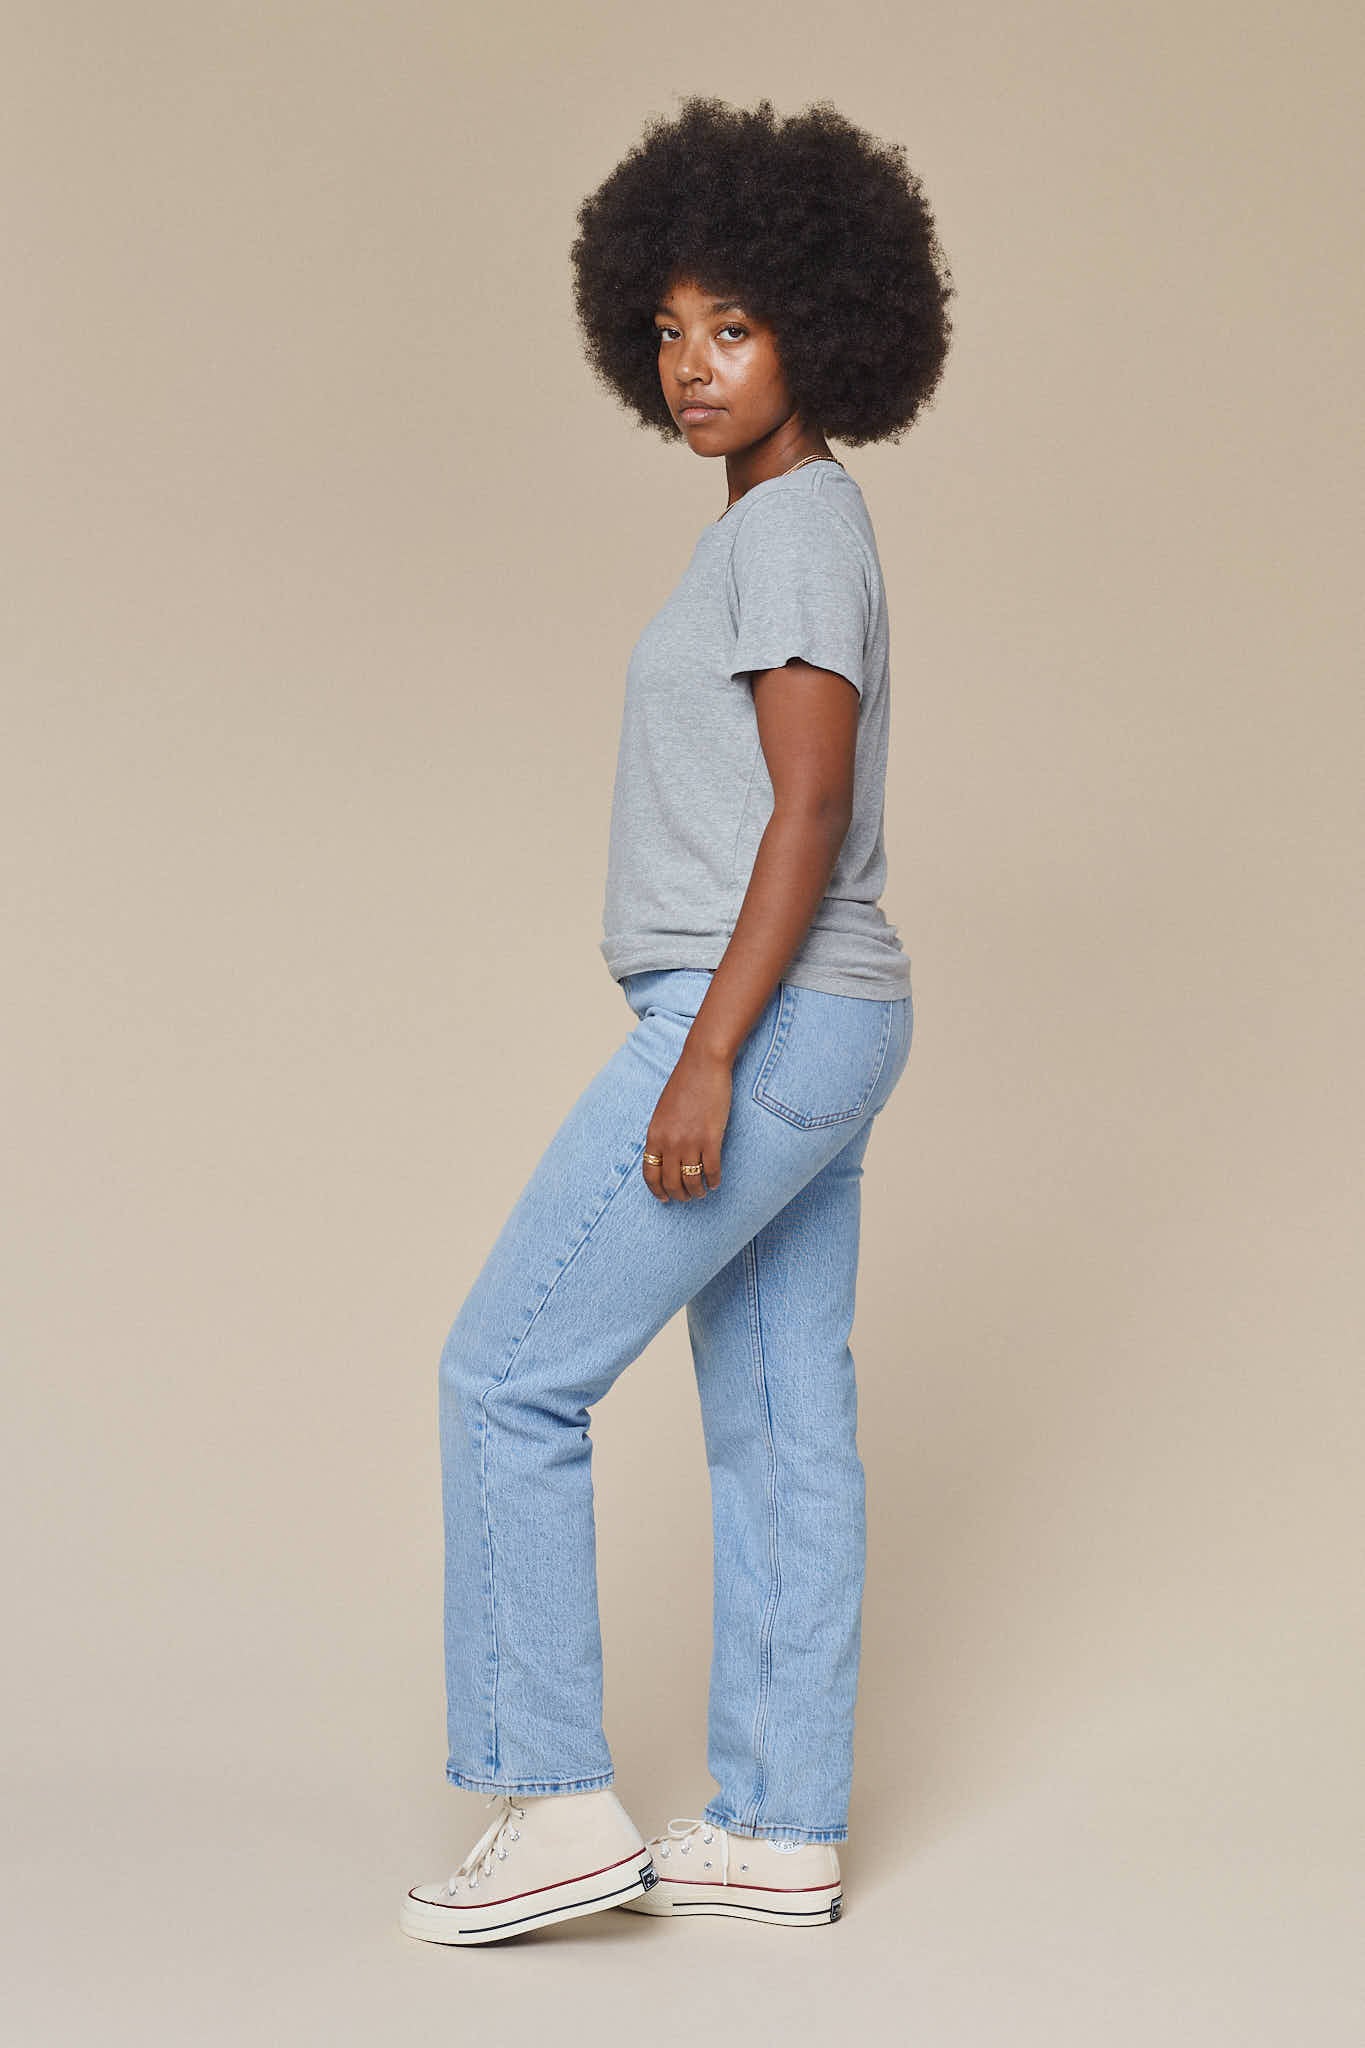 Hemp and Organic Cotton Women's Shorts, Lightweight Culottes - Denim -  Wallis Evera